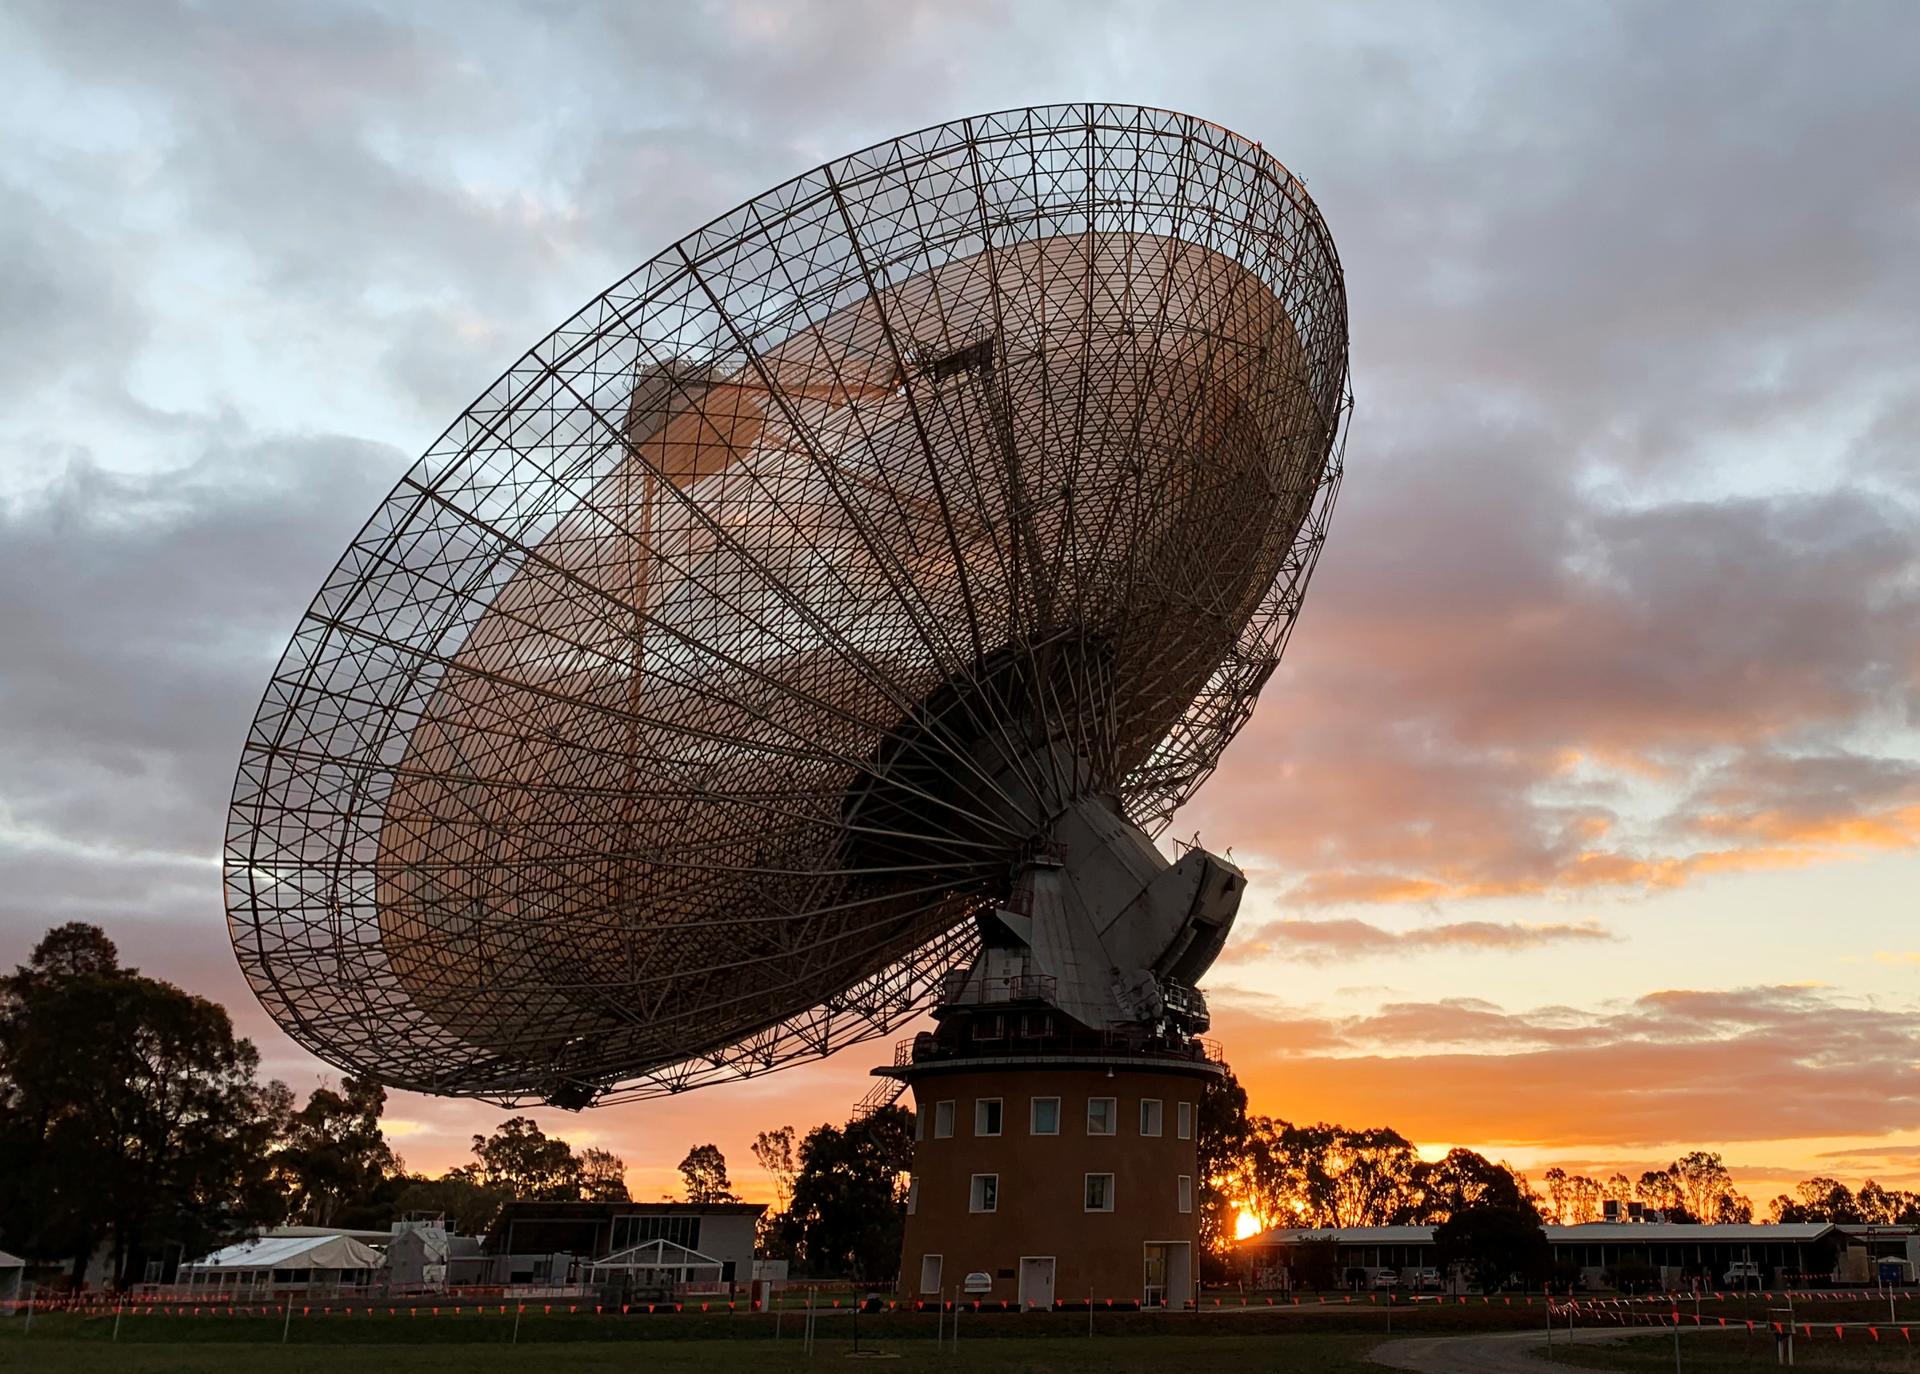 A radio telescope dish at sunset. 